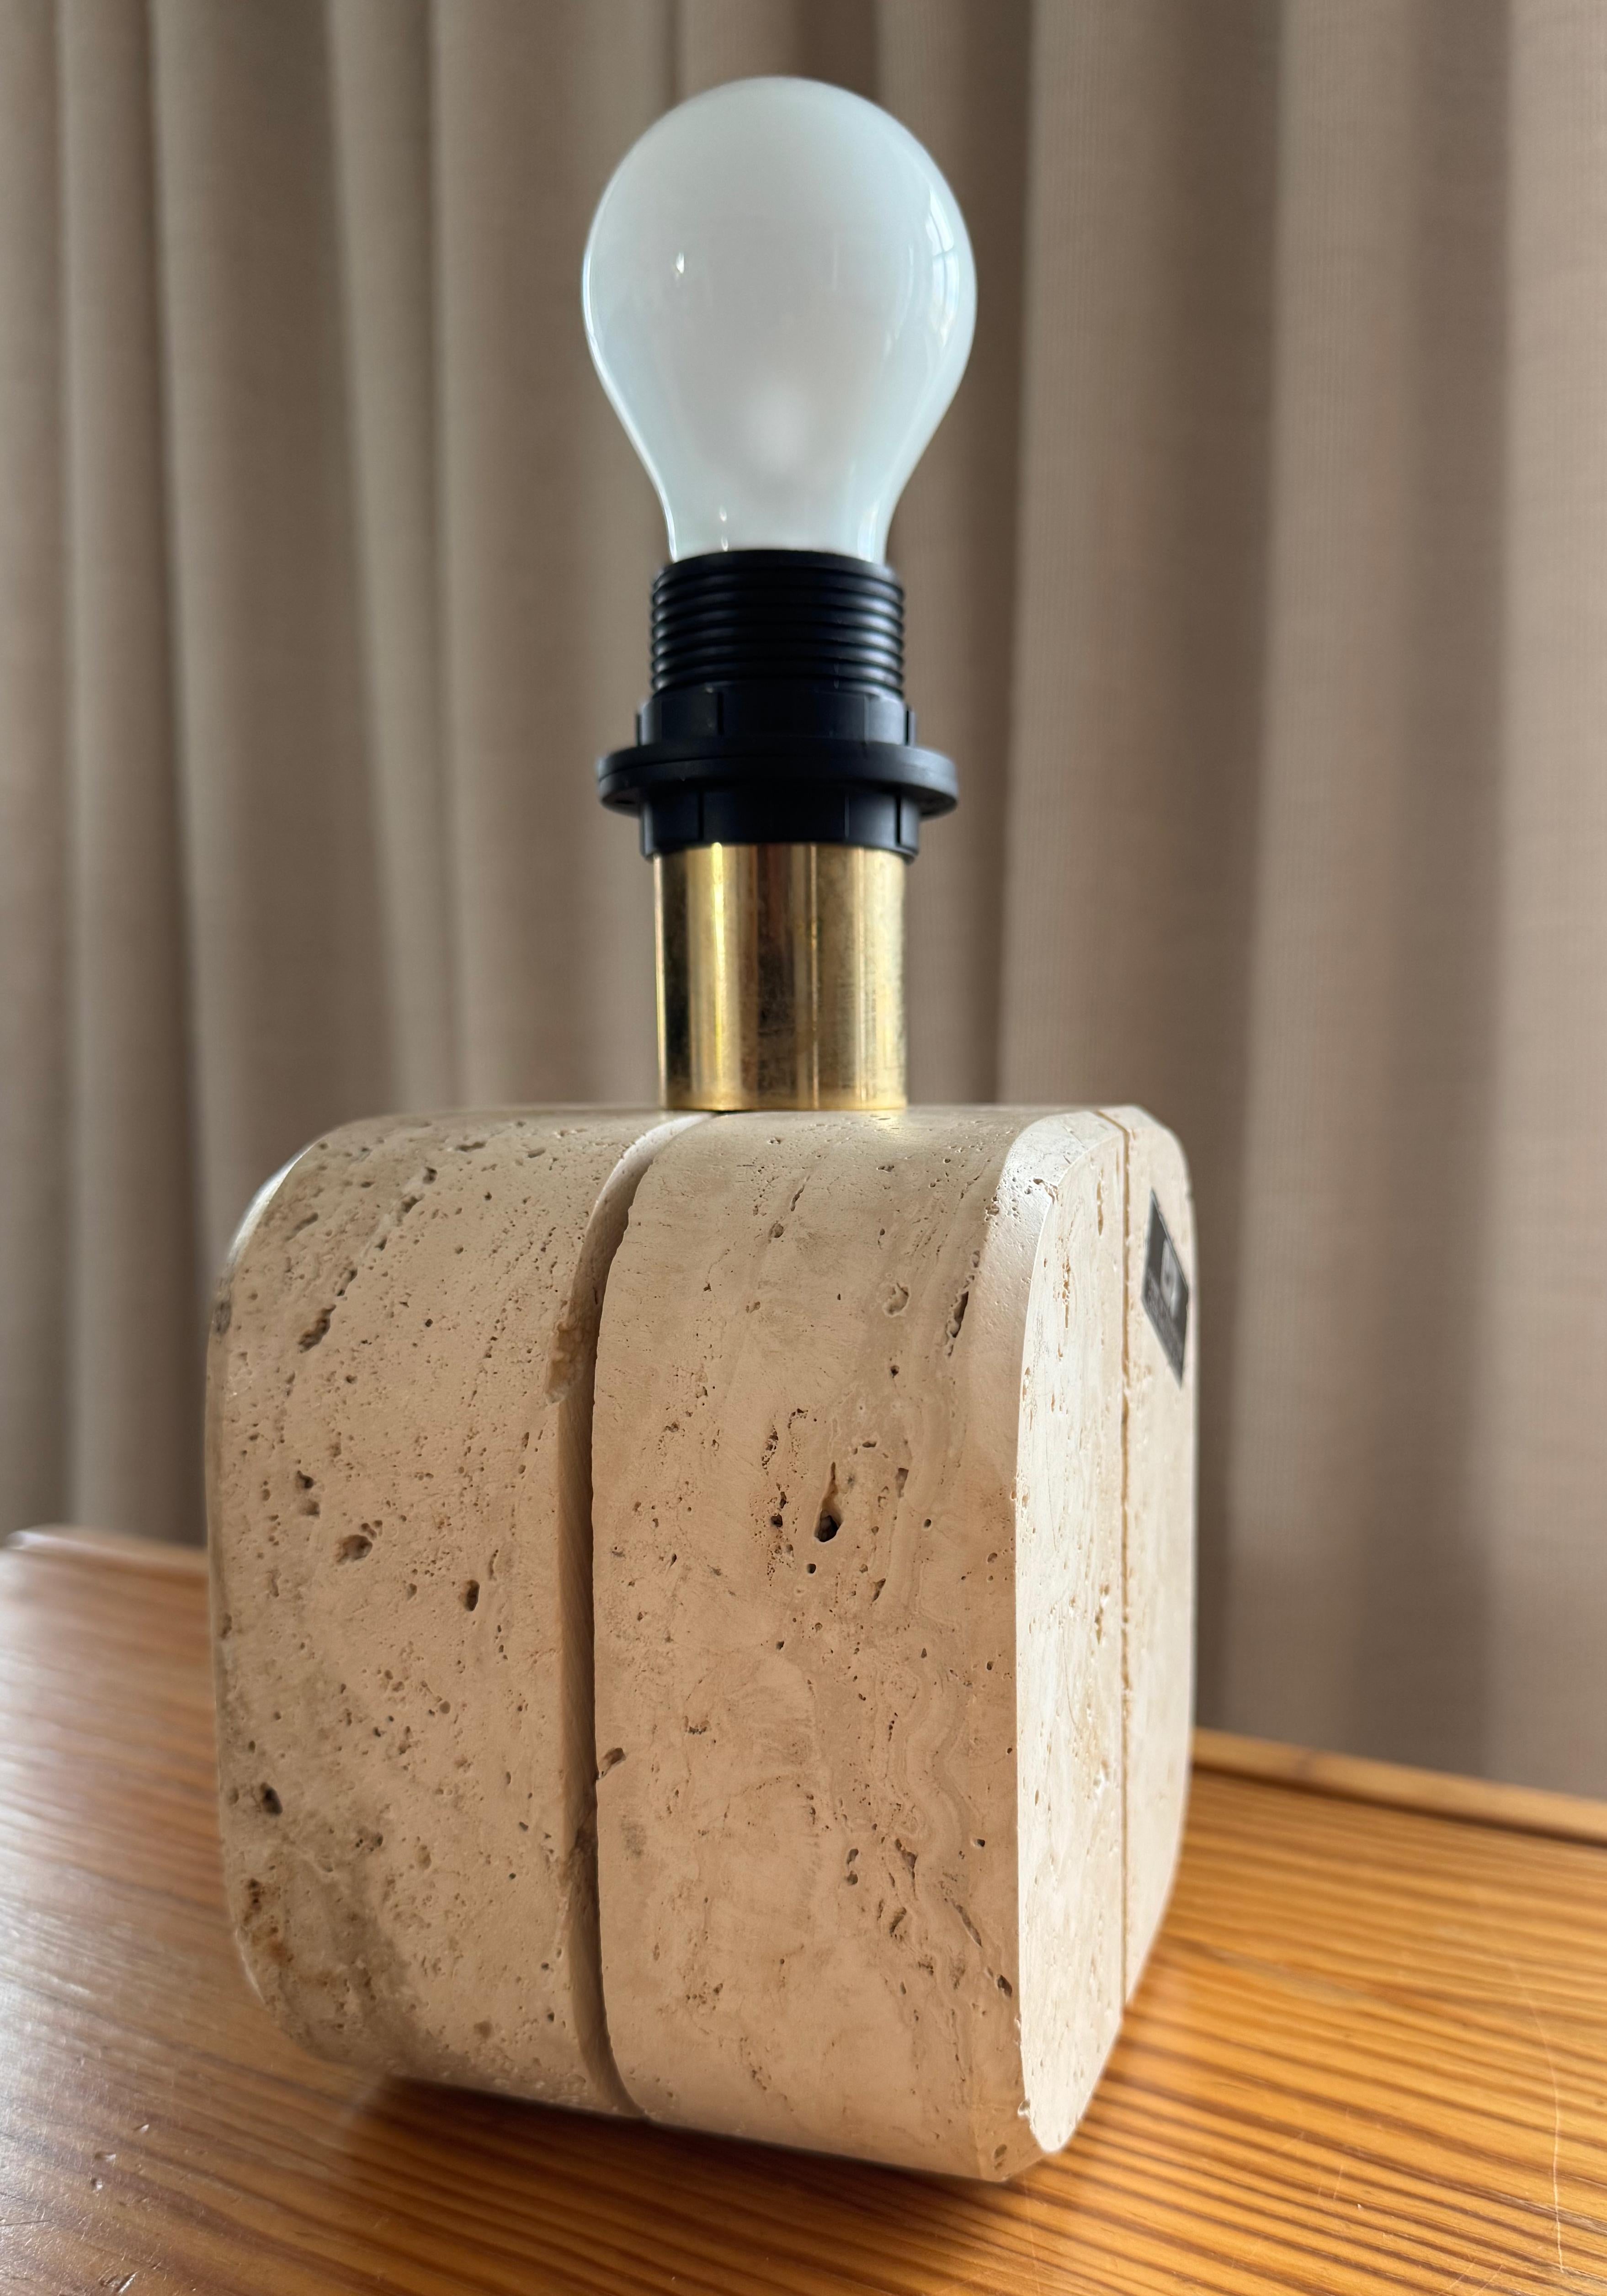 Italian Cerri Nestore Table Lamp in Travertine, 1970s. Made in Italy. For Sale